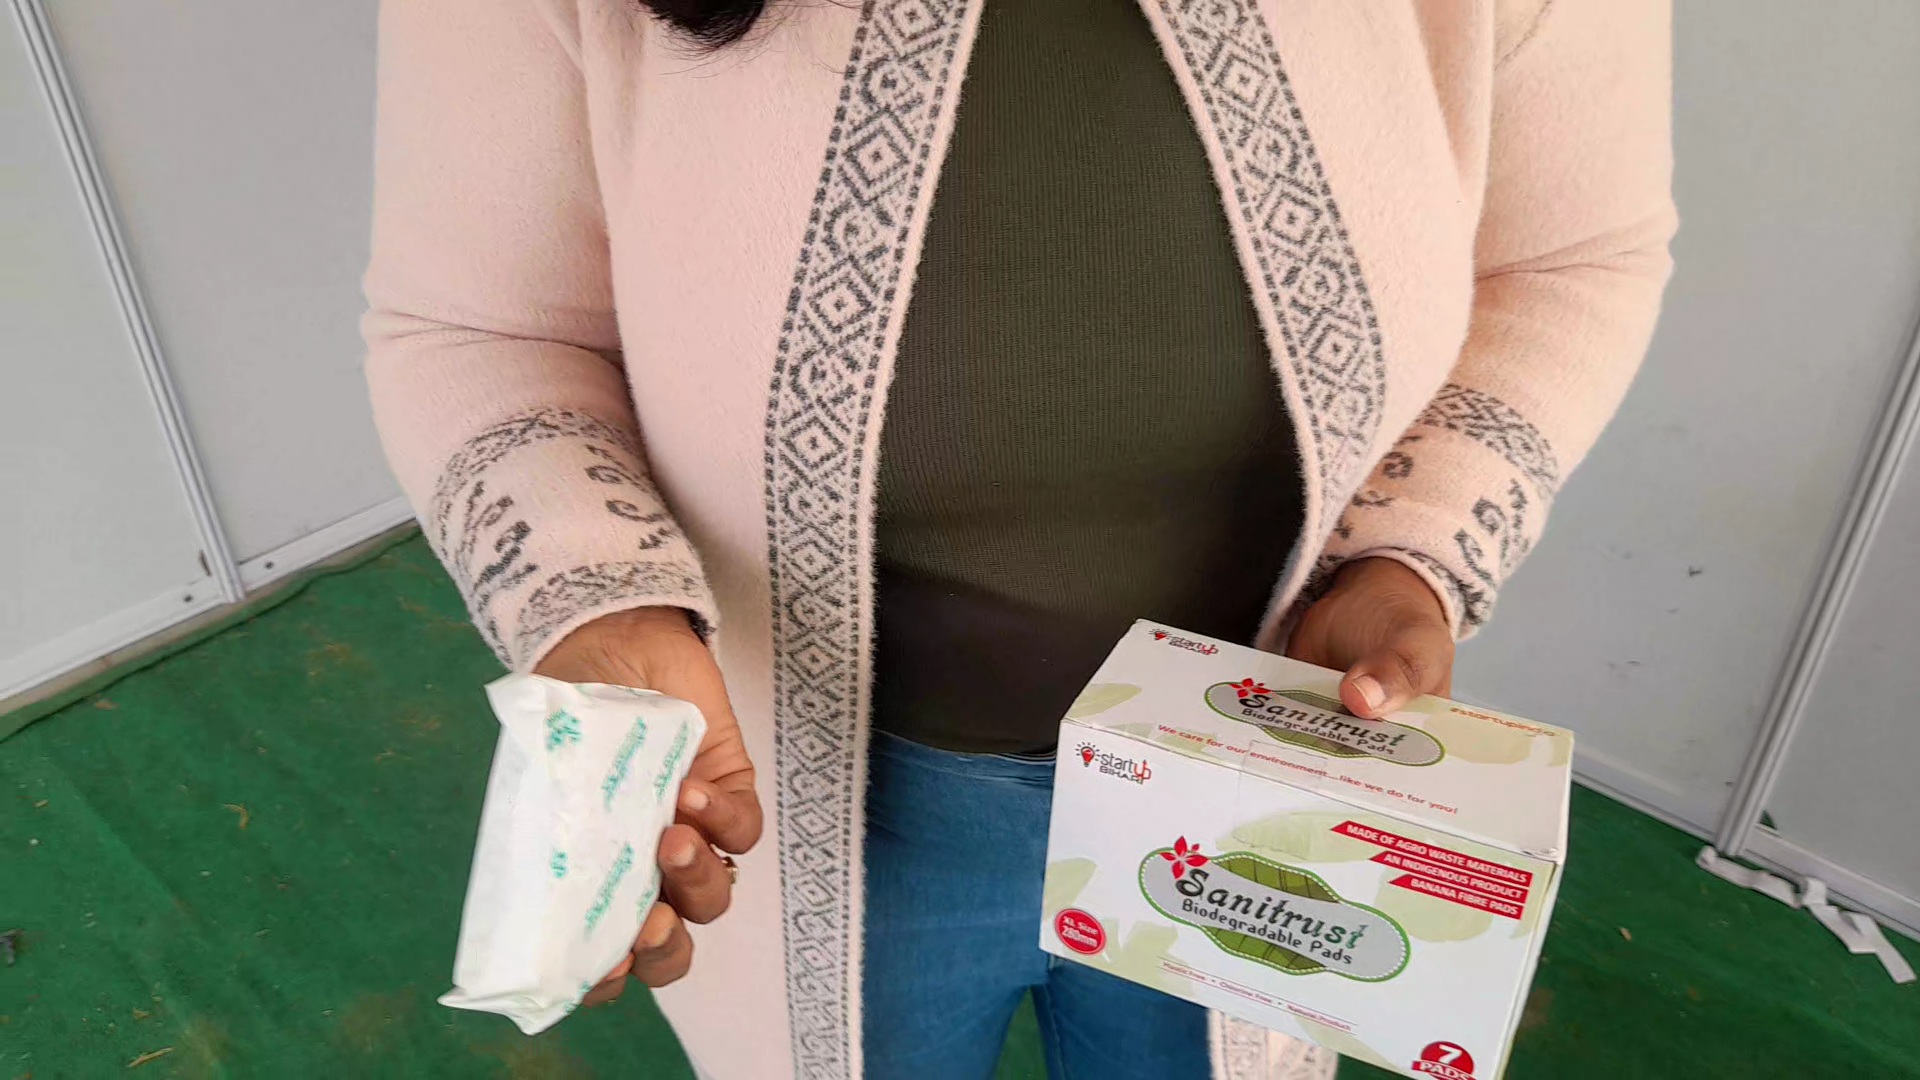 Bihar Girl made biodegradable sanitary pads